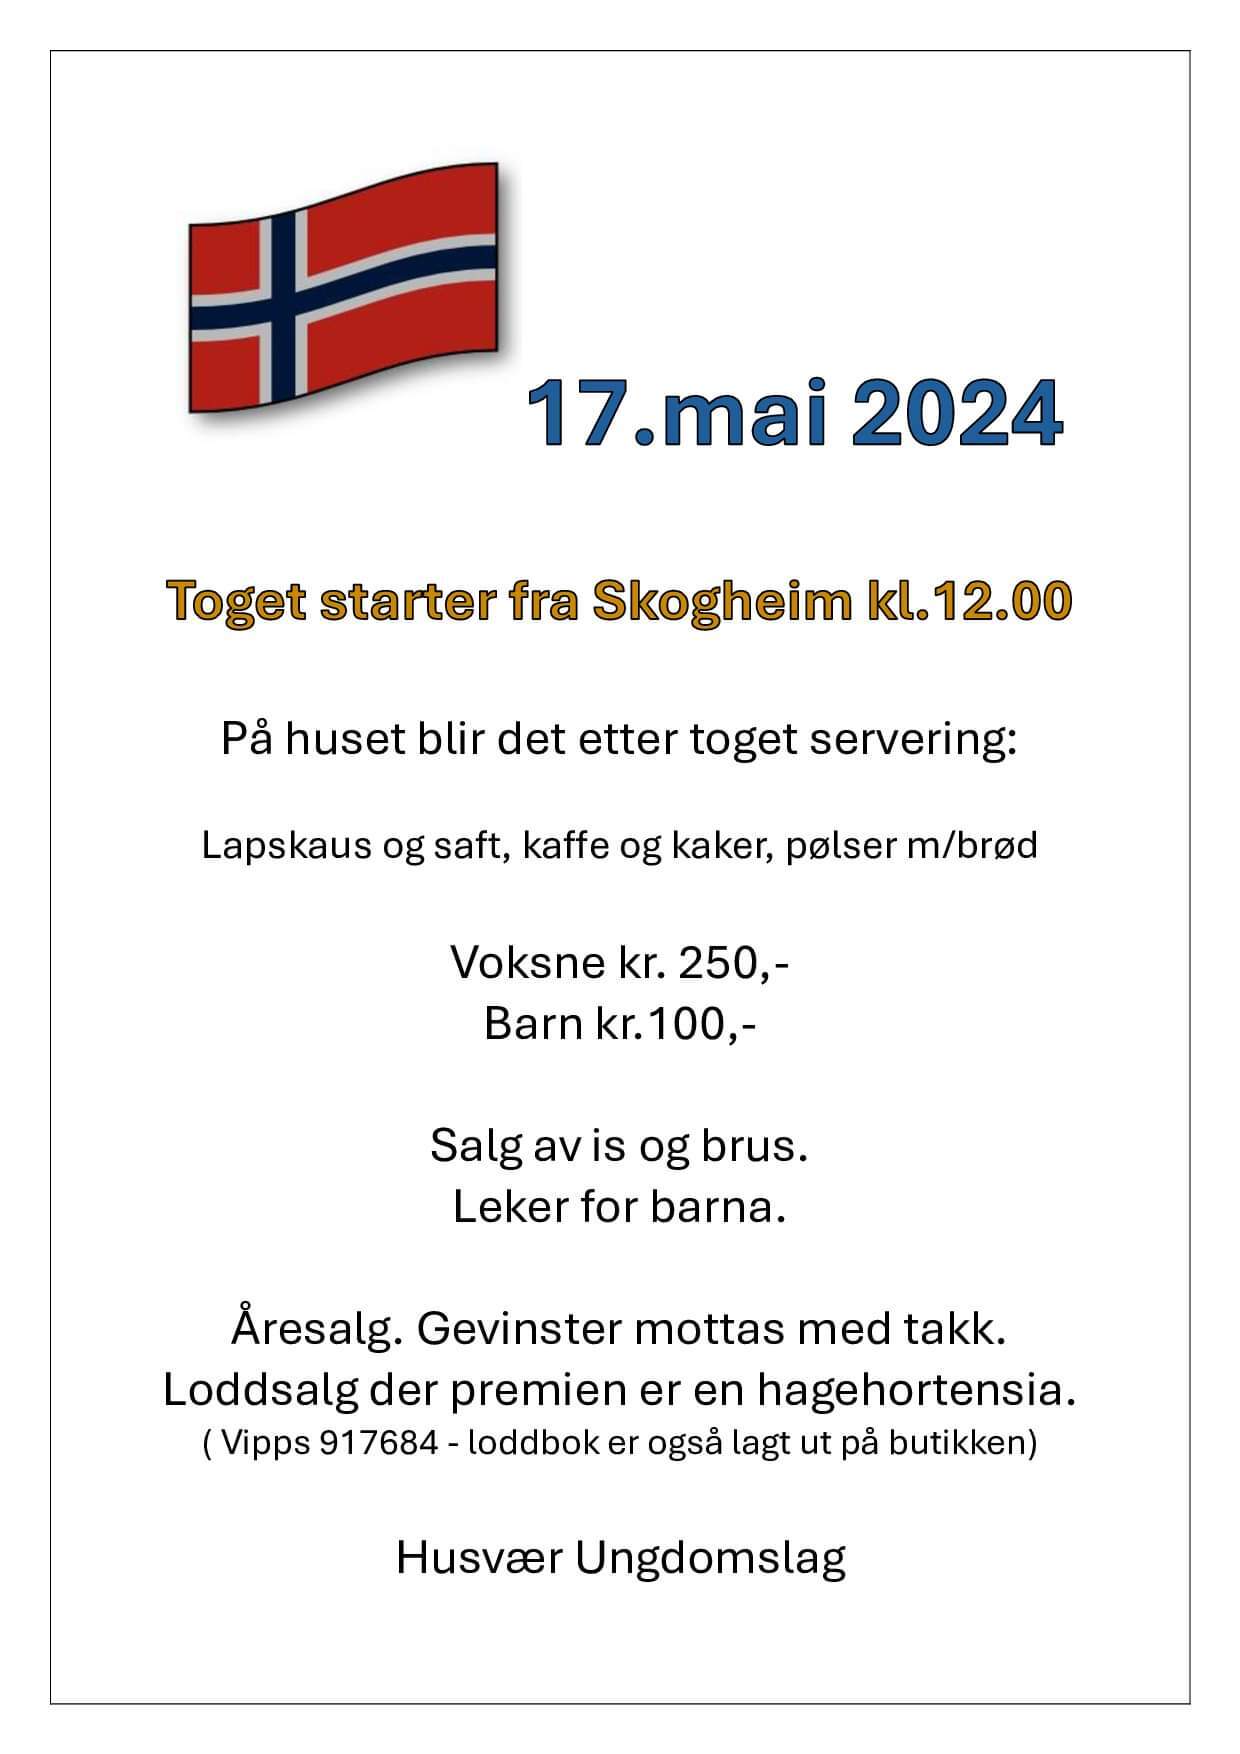 17. mai i Husvær 2024.jpg